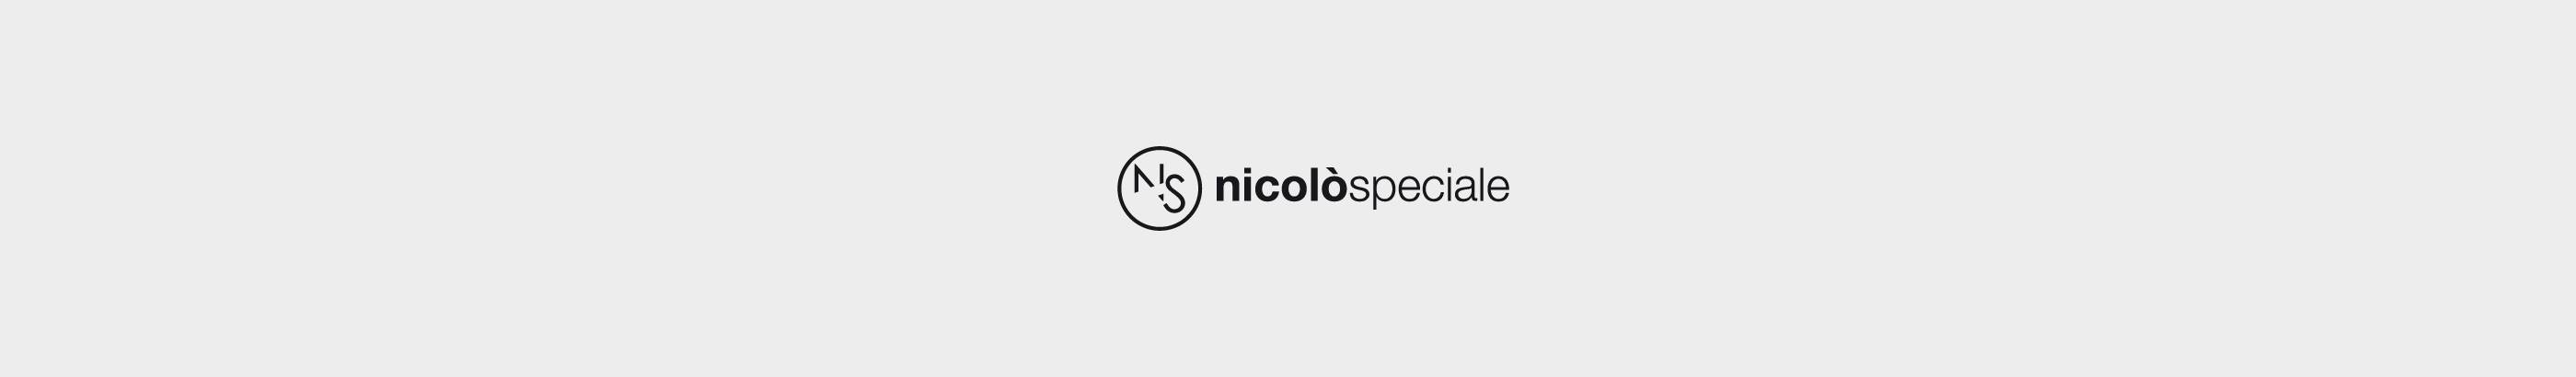 Nicolò Speciale のプロファイルバナー